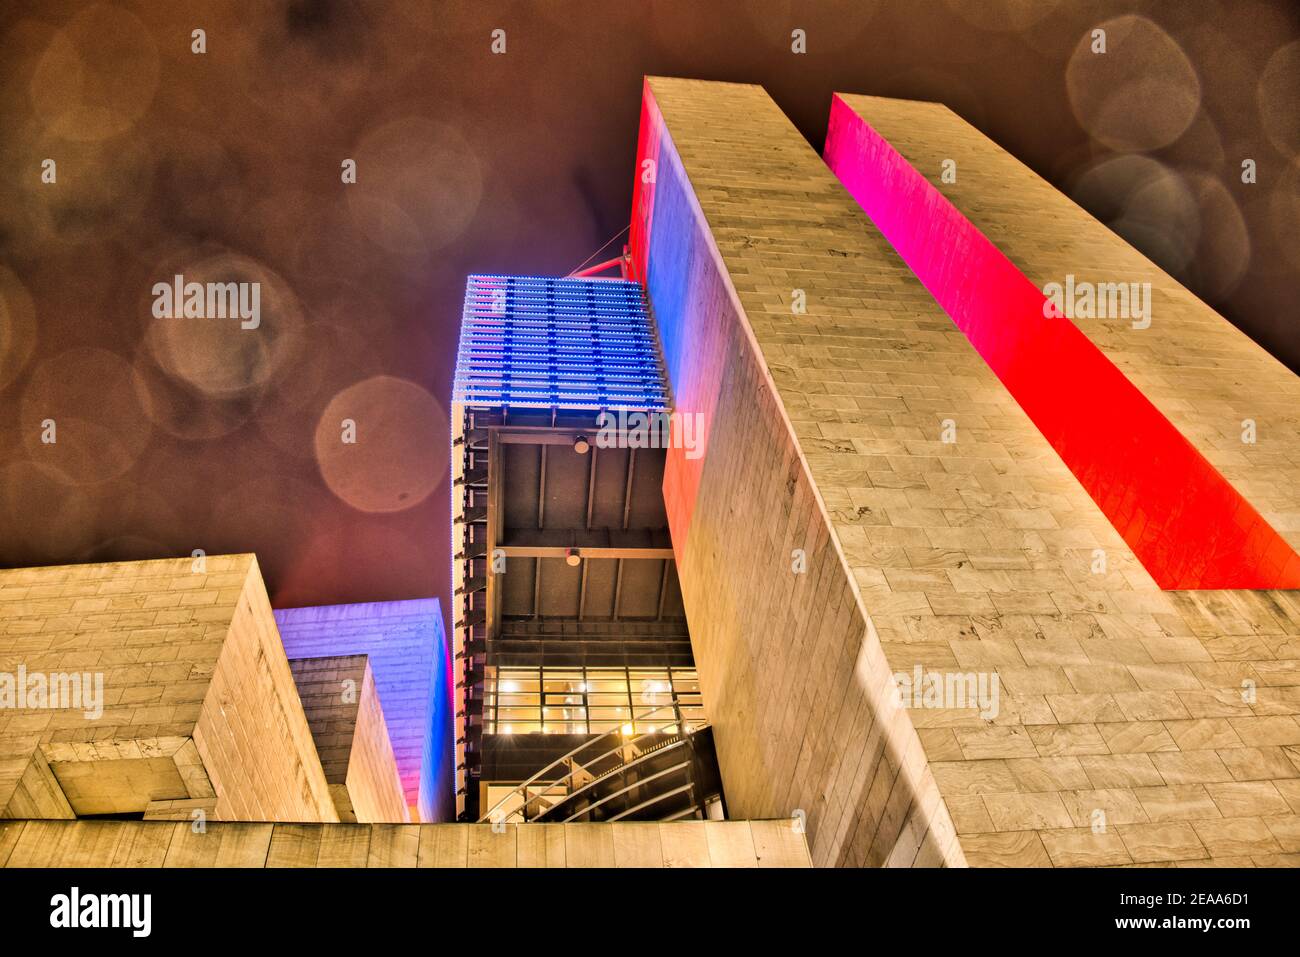 In der Nacht, Casino di Campione in rot blau beleuchtet Stockfoto